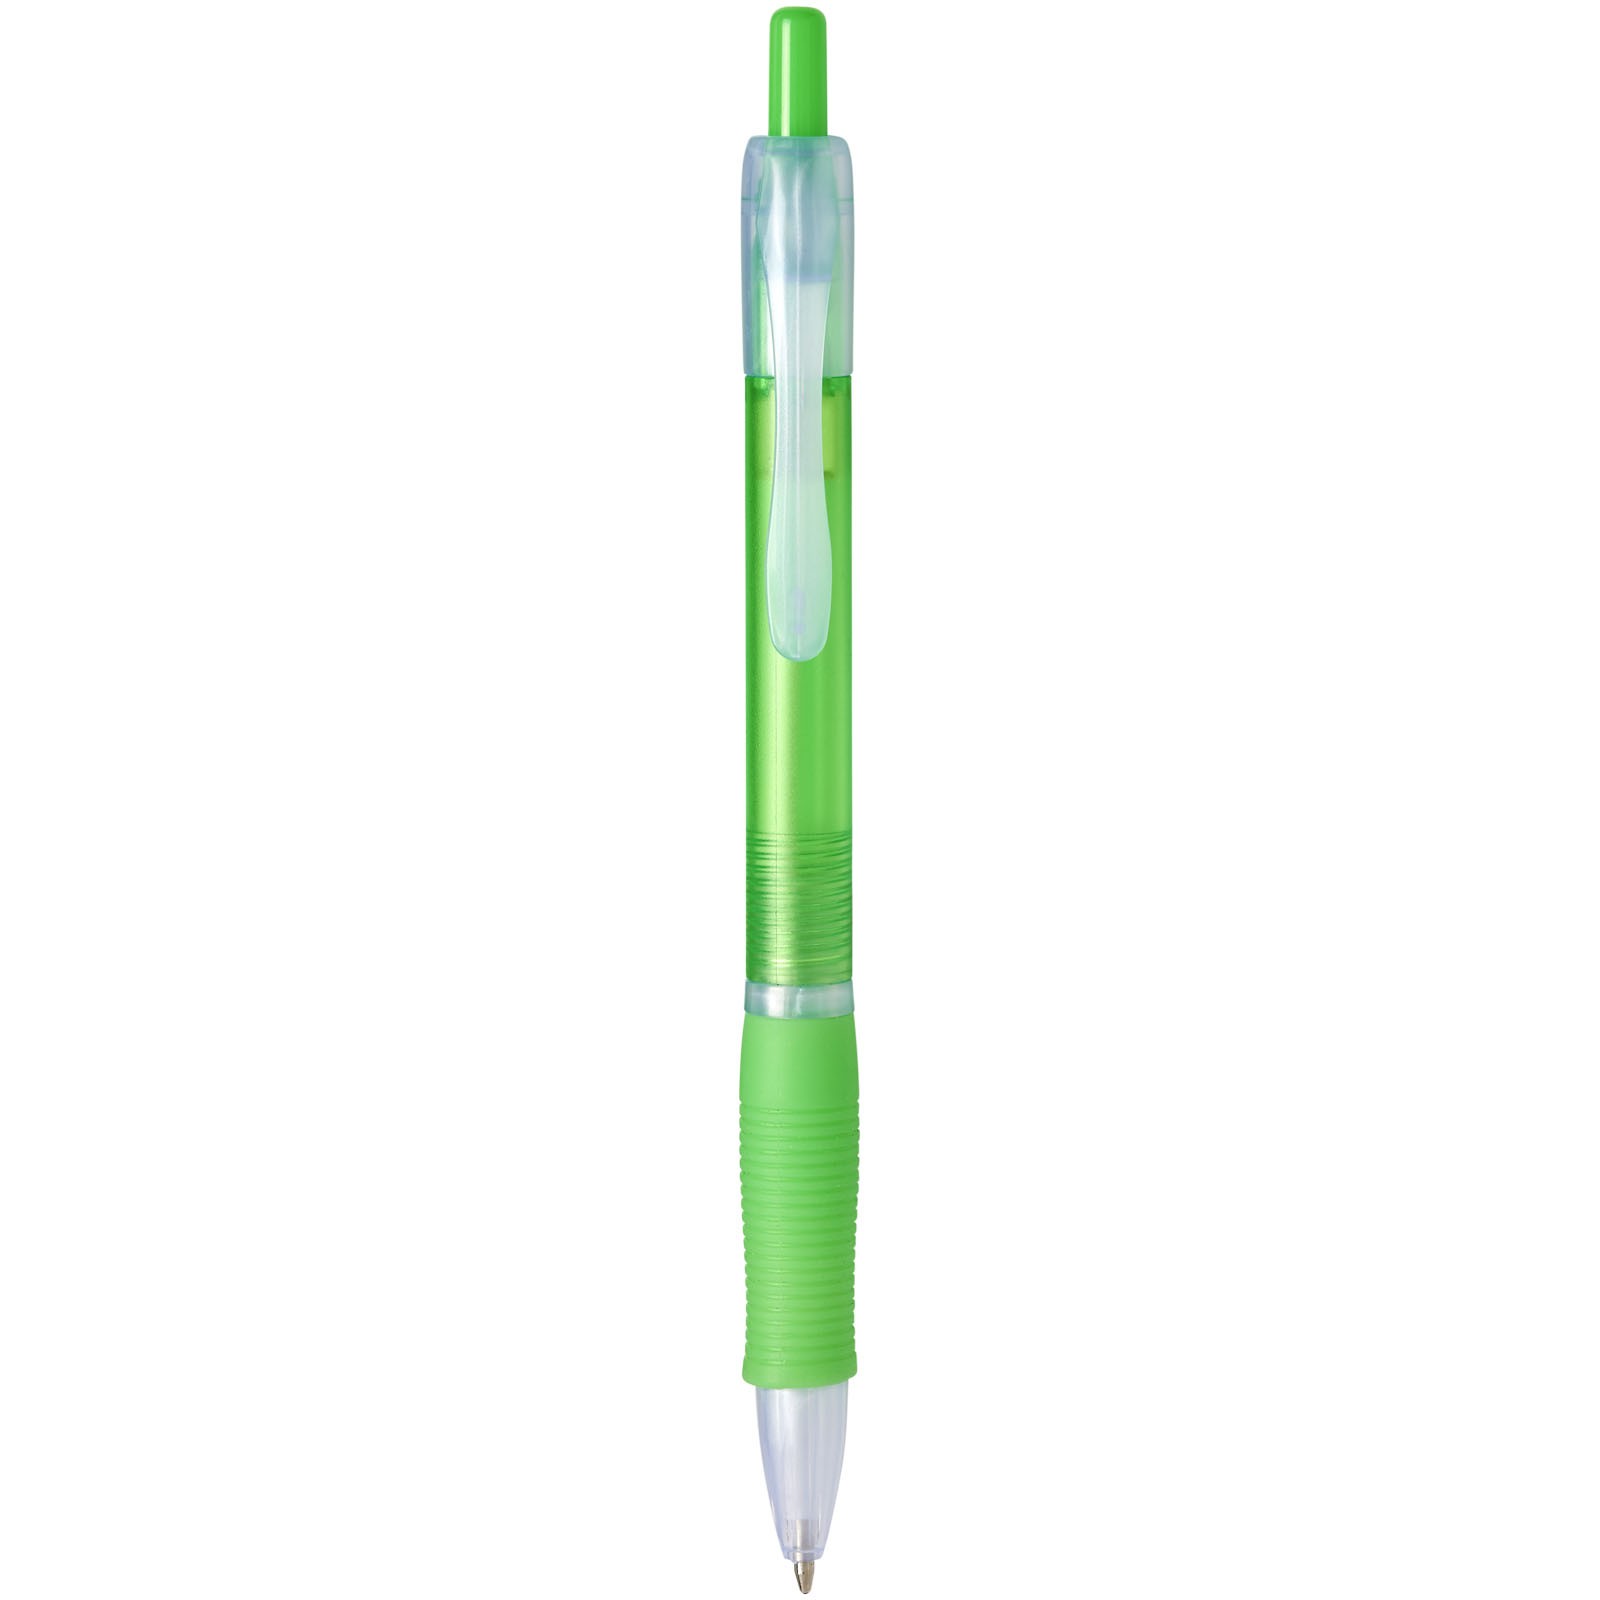 Kuličkové pero Trim - Limetka